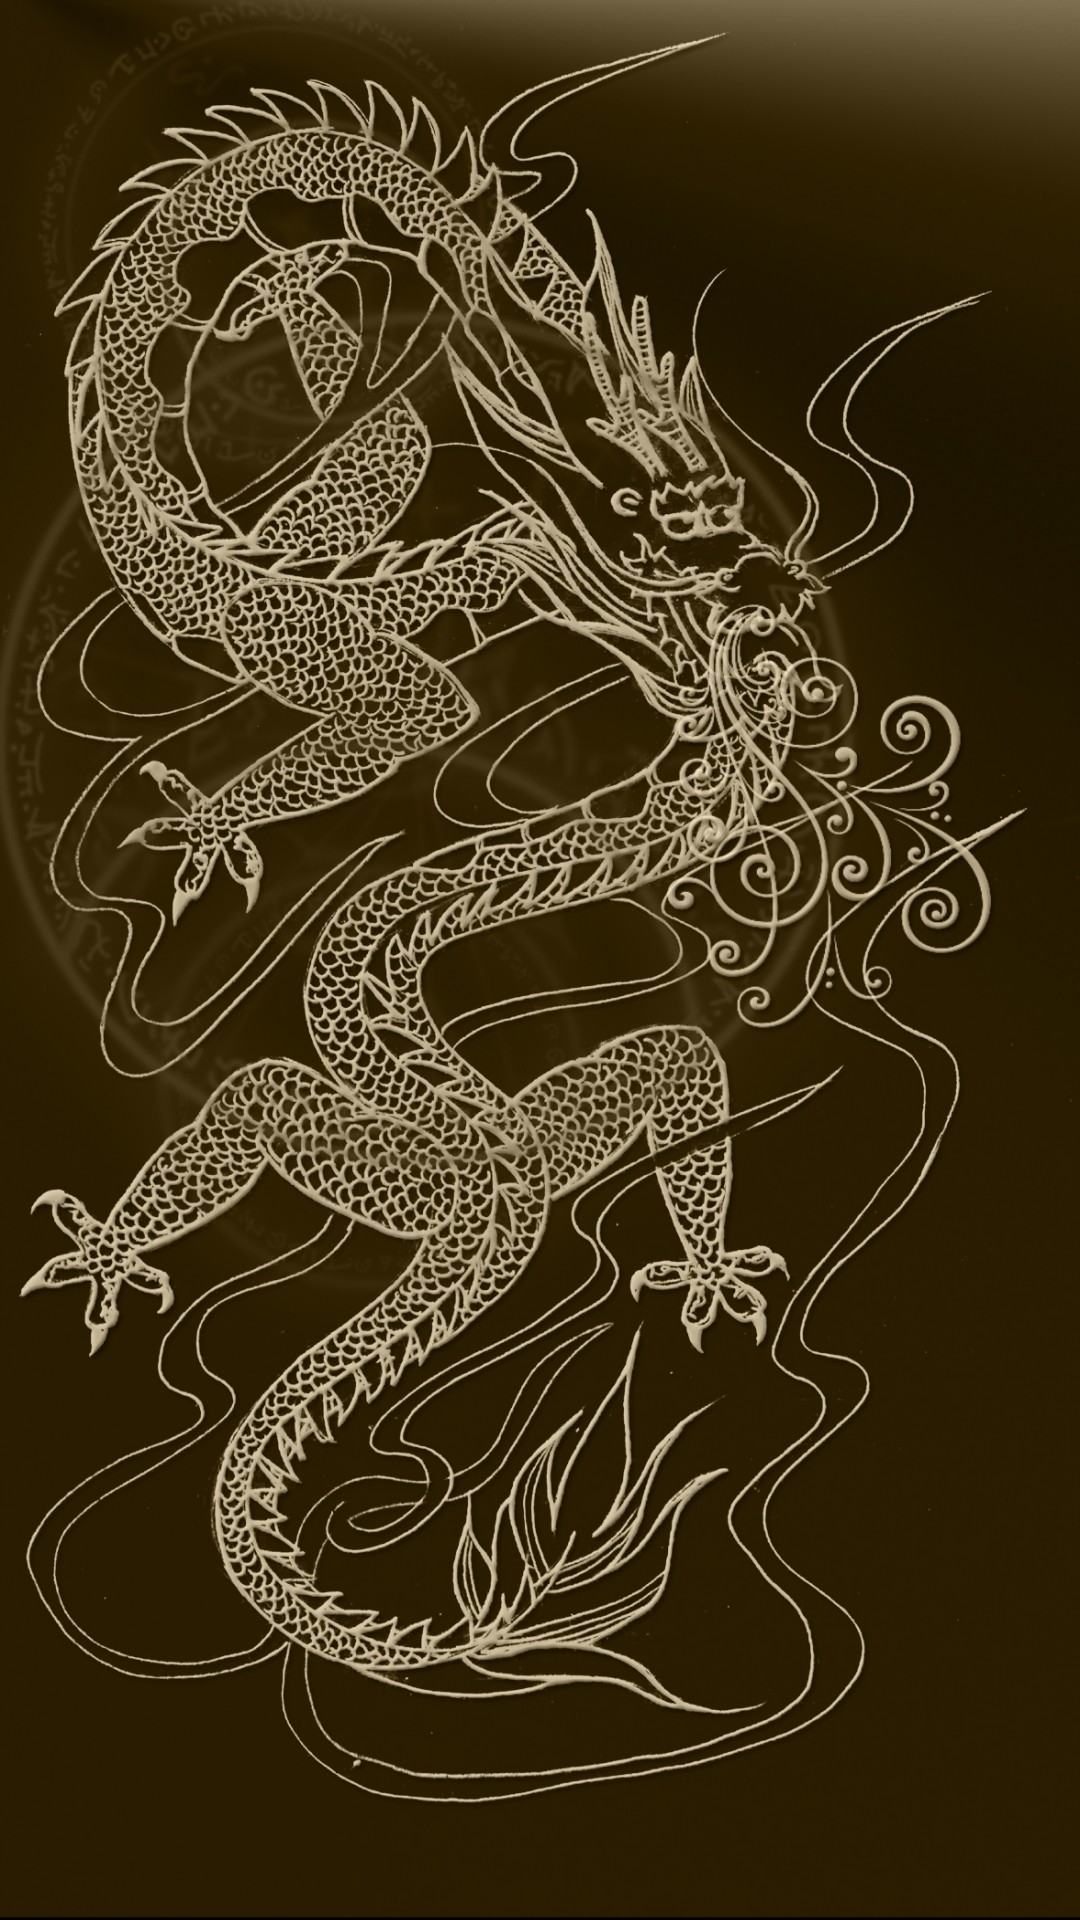 1080x1920 Artistic Chinese Dragon Dragon. Wallpaper 500530